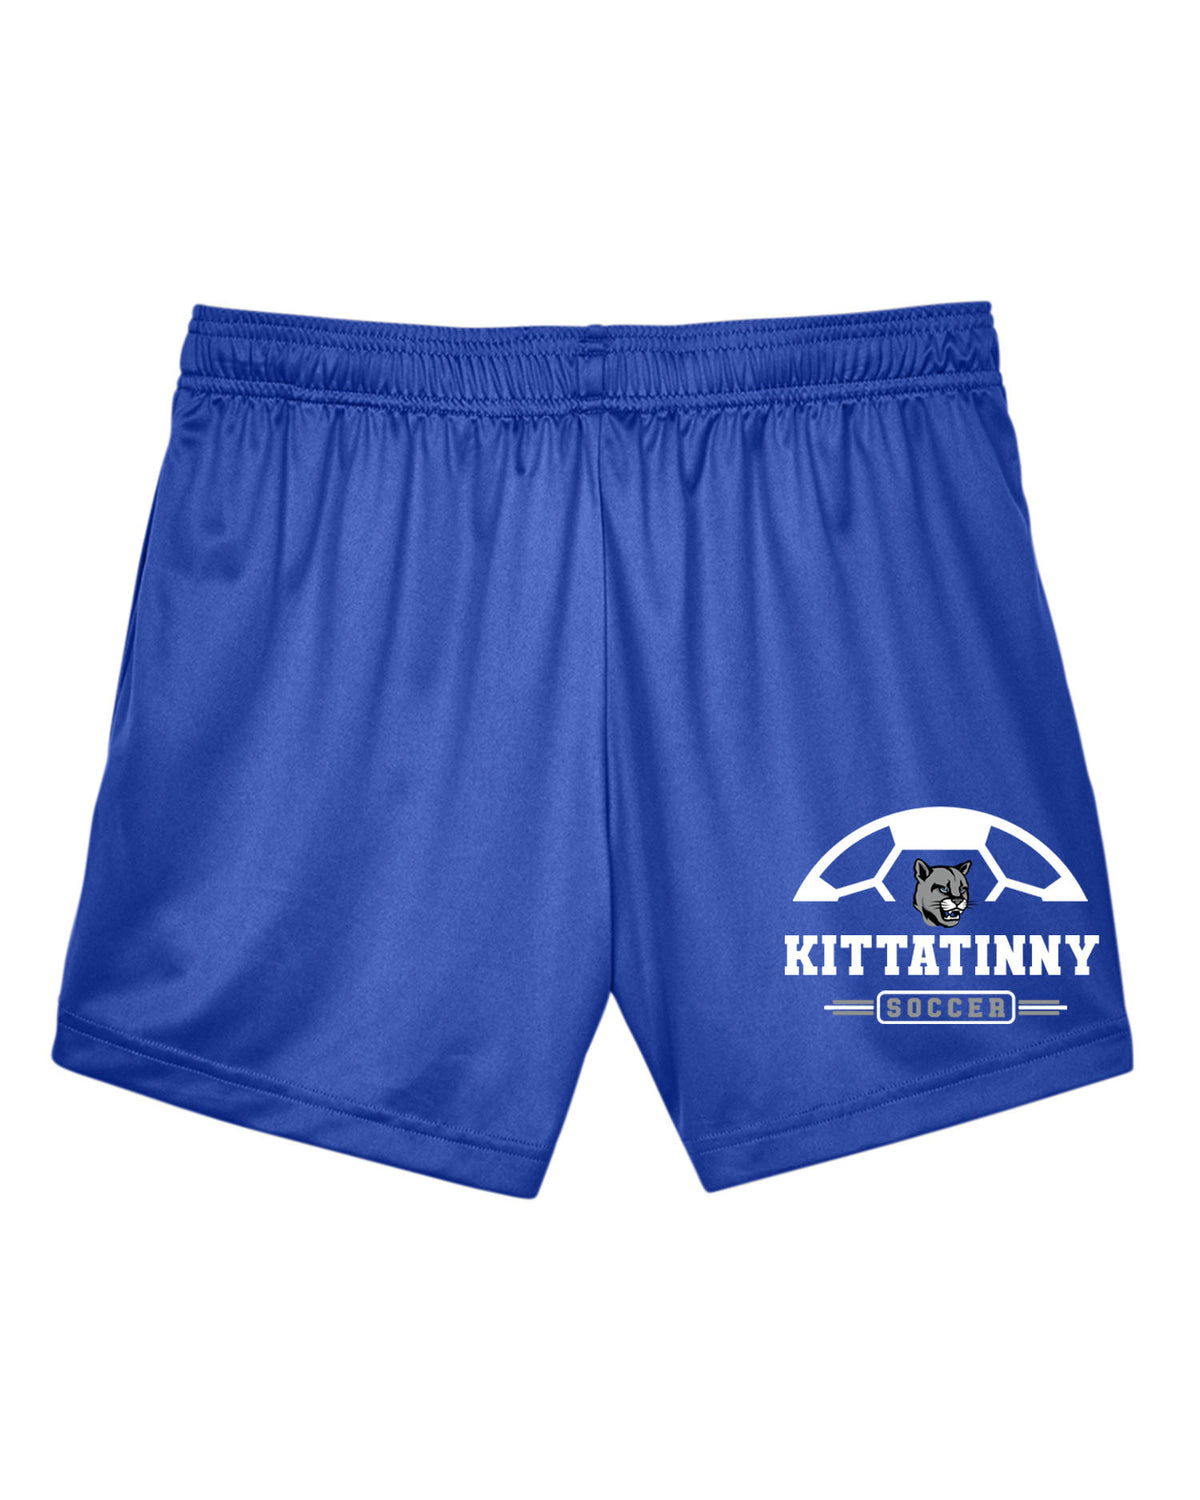 Kittatinny Soccer Ladies Performance Design 2 Shorts